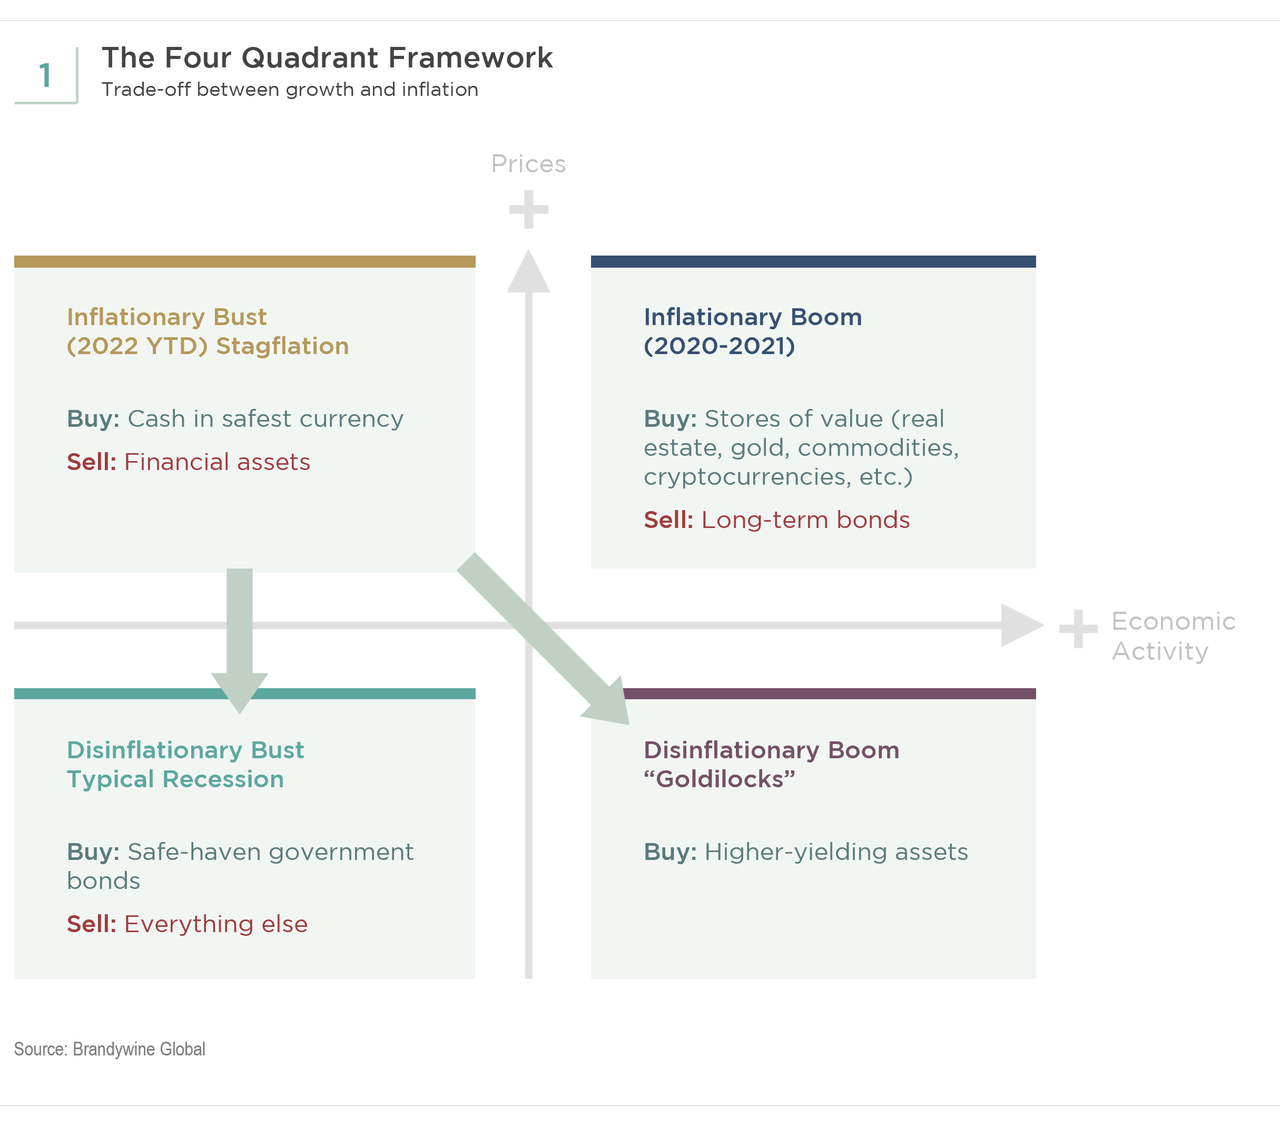 The 4 quadrant framework